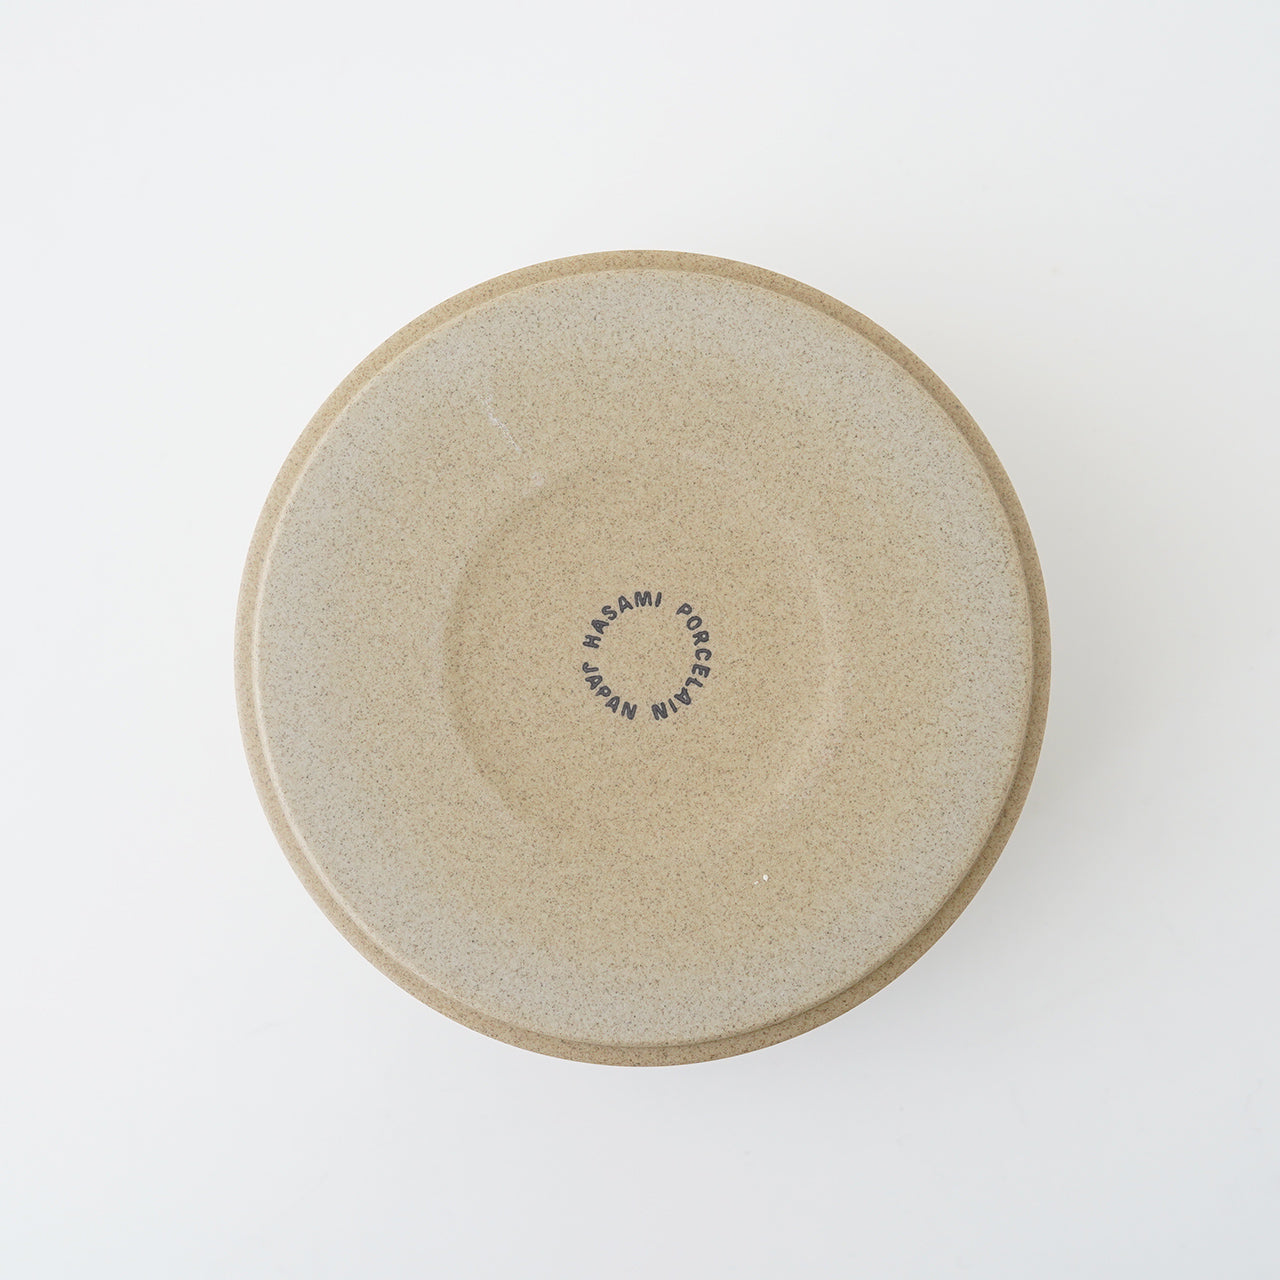 HASAMI PORCELAIN ハサミポーセリン ボウル Bowl 14.5cm×5.5cm 波佐見焼き 西海陶器 皿 HP008